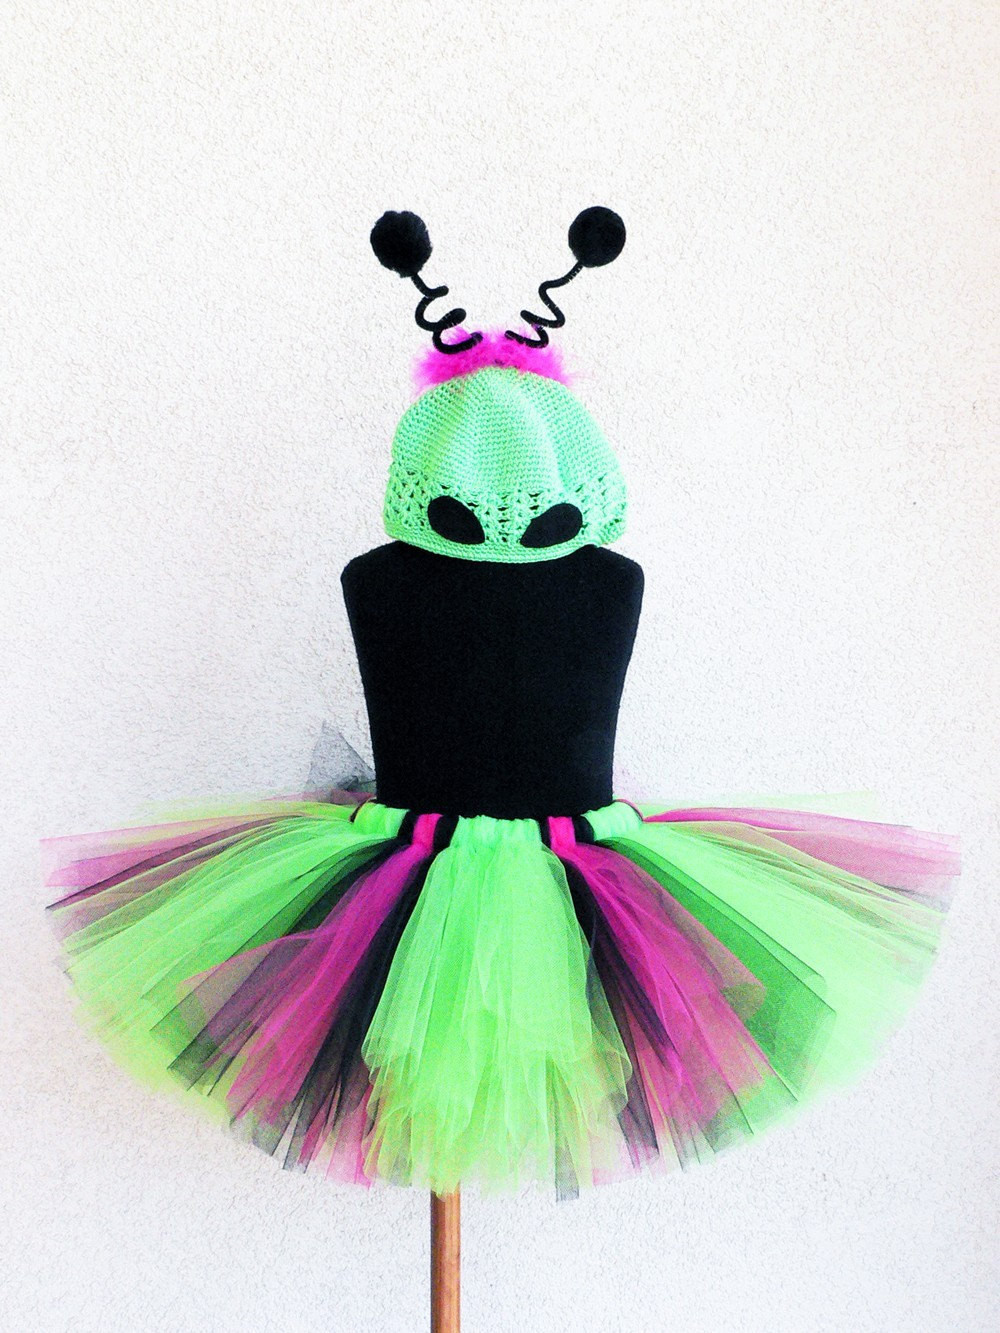 Best ideas about Alien DIY Costume
. Save or Pin Alien Princess Custom Sewn Alien Tutu Costume Includes a Now.